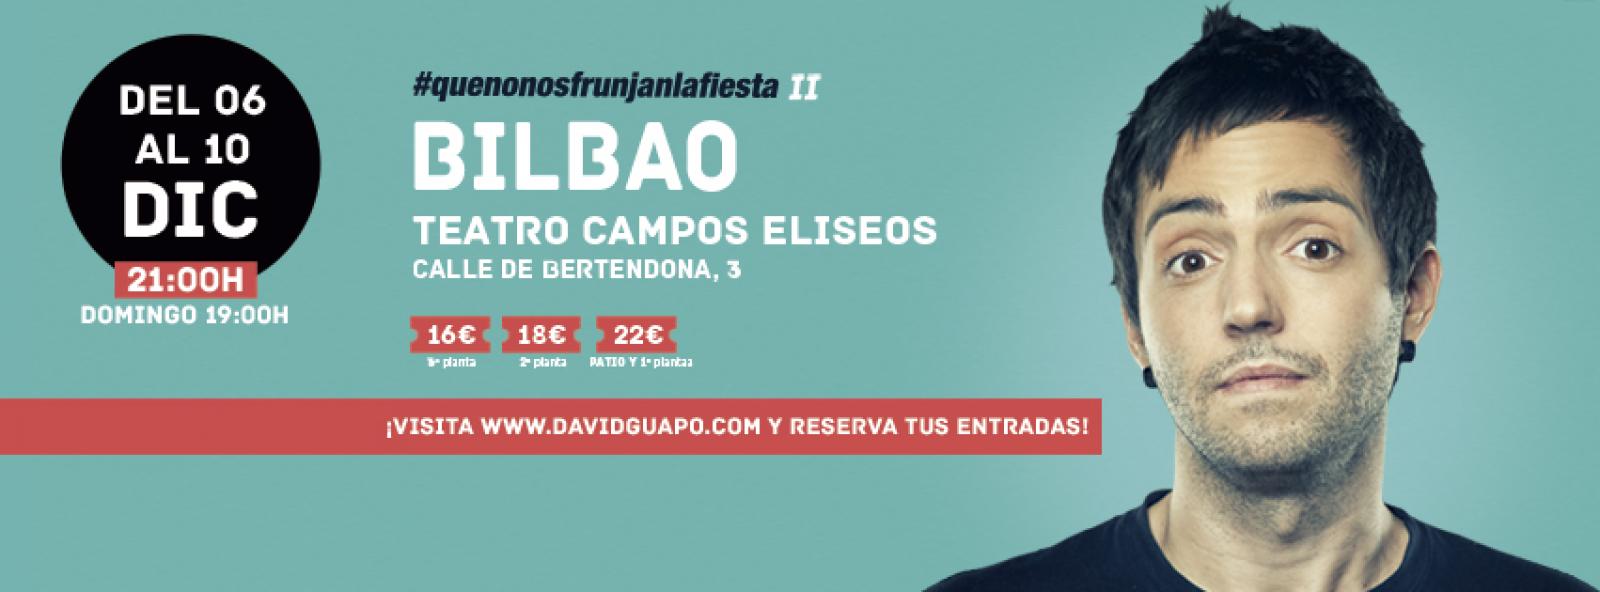 ¡David Guapo vuelve a Bilbao con #quenonosfrunjanlafiesta2!